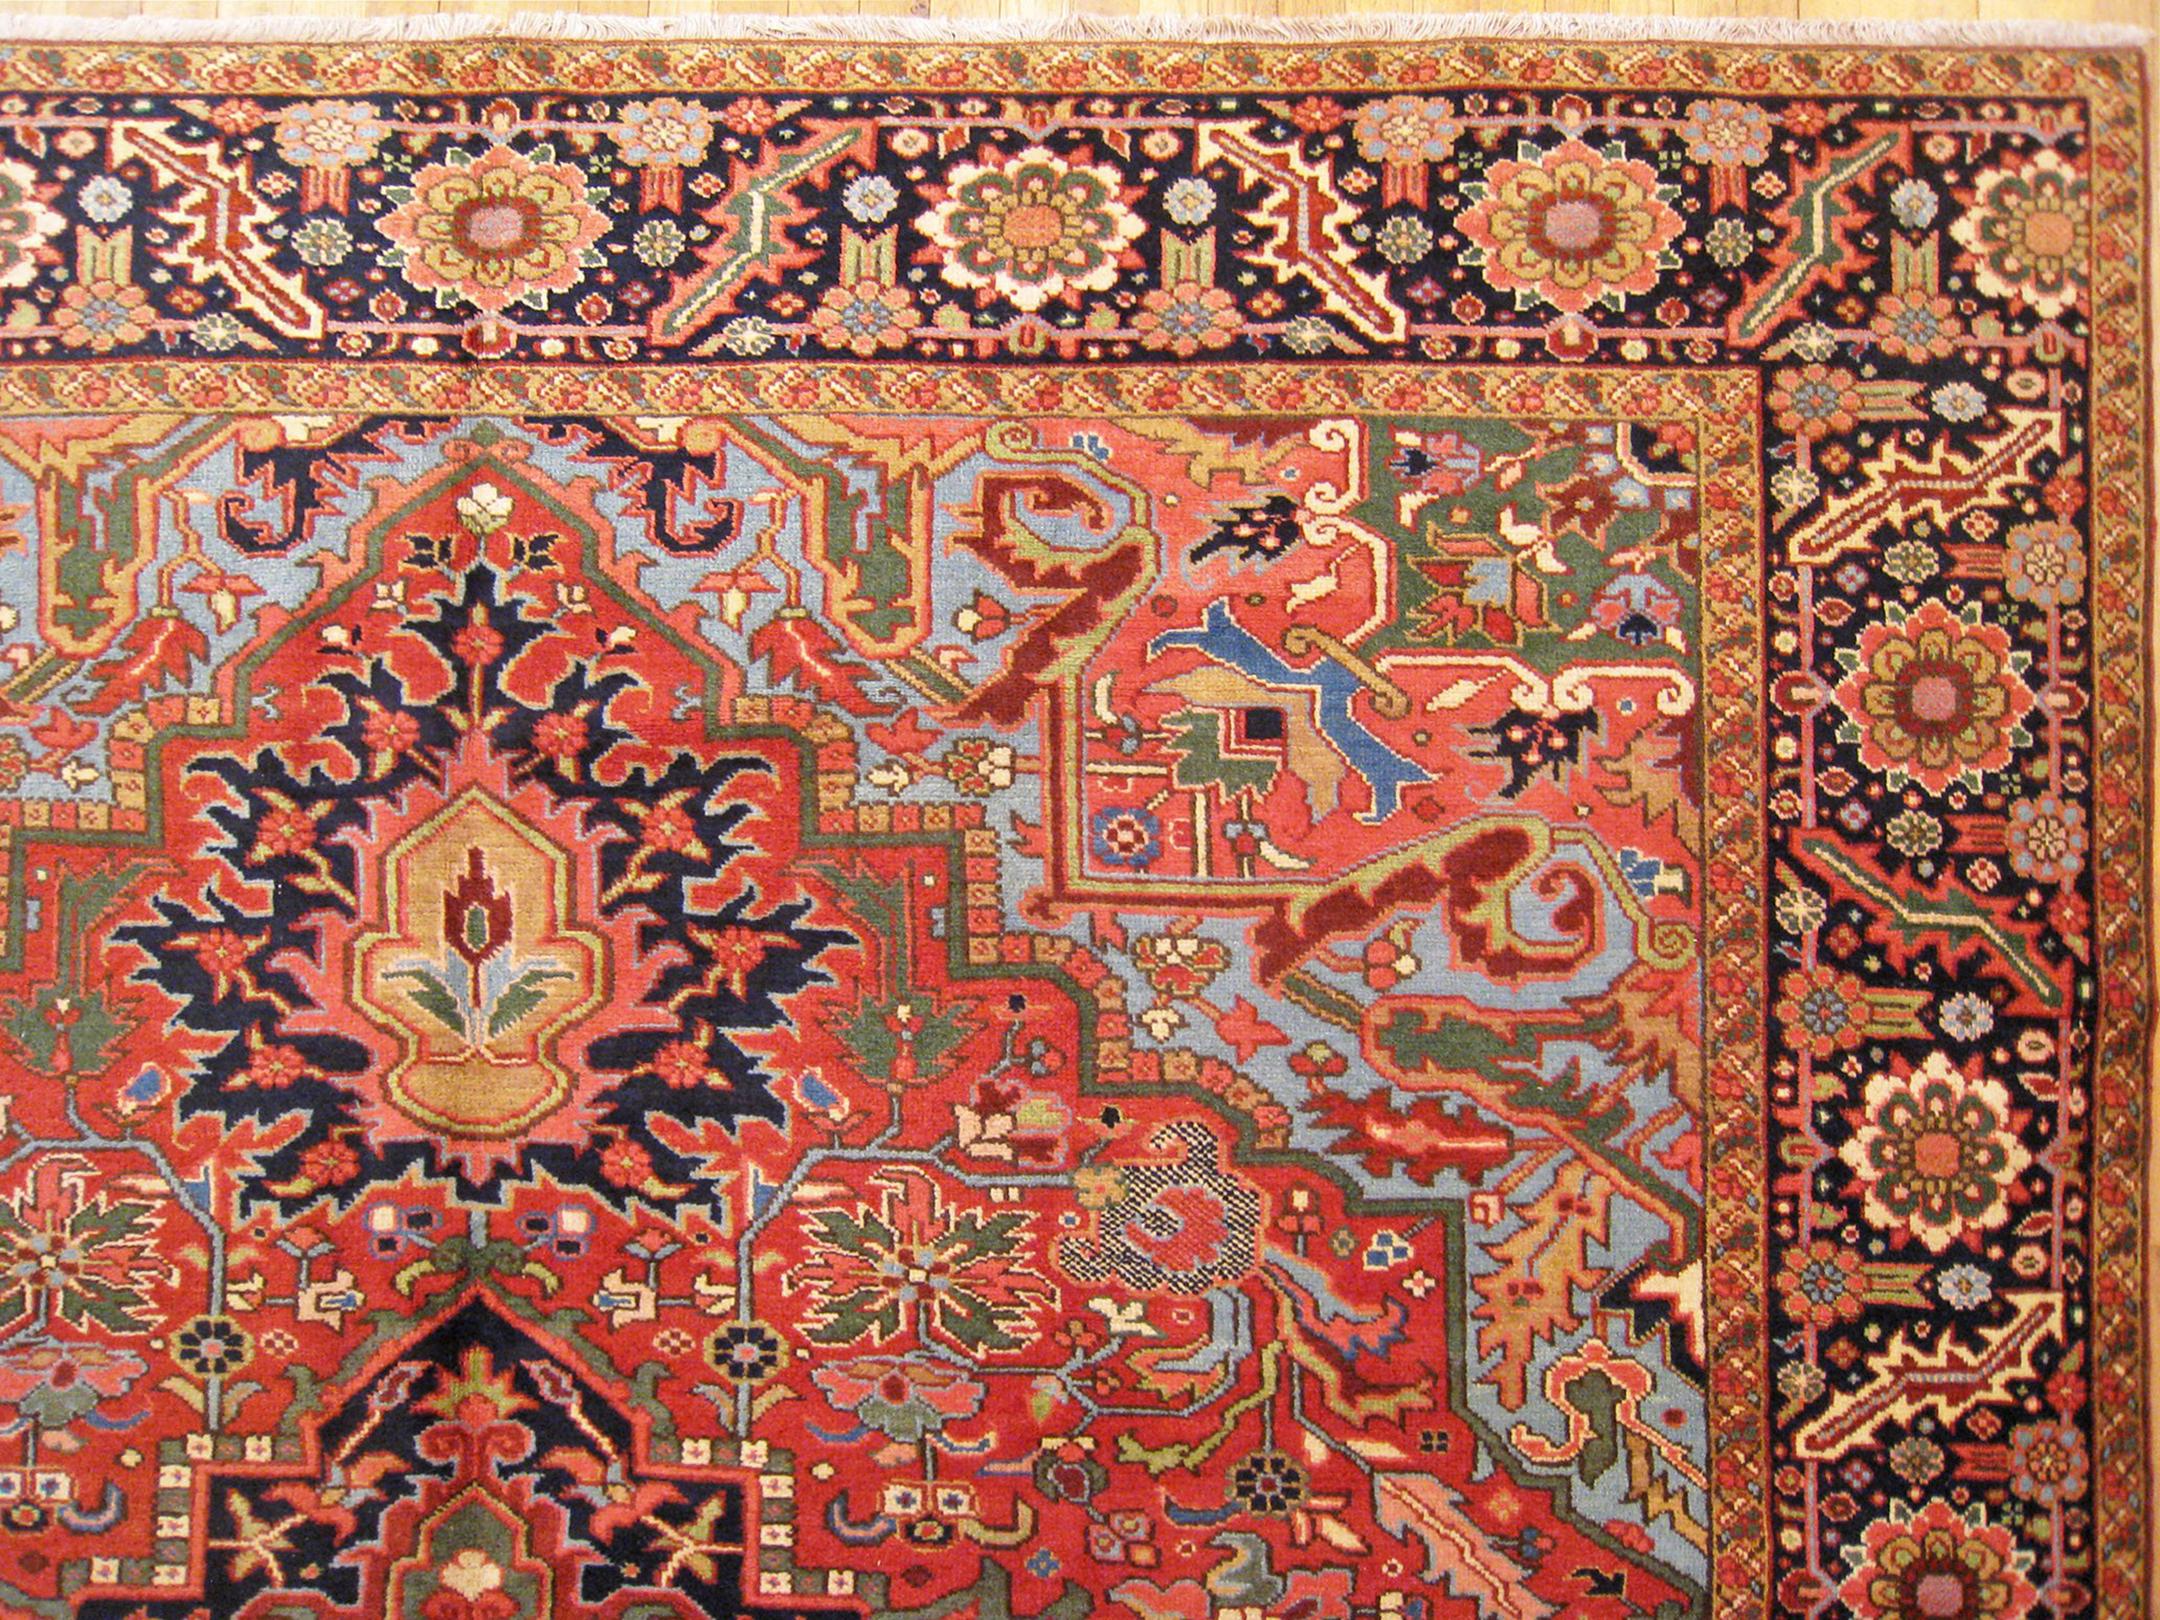 Vintage Persian Decorative Orienta Herizl Rug in Room Size 4